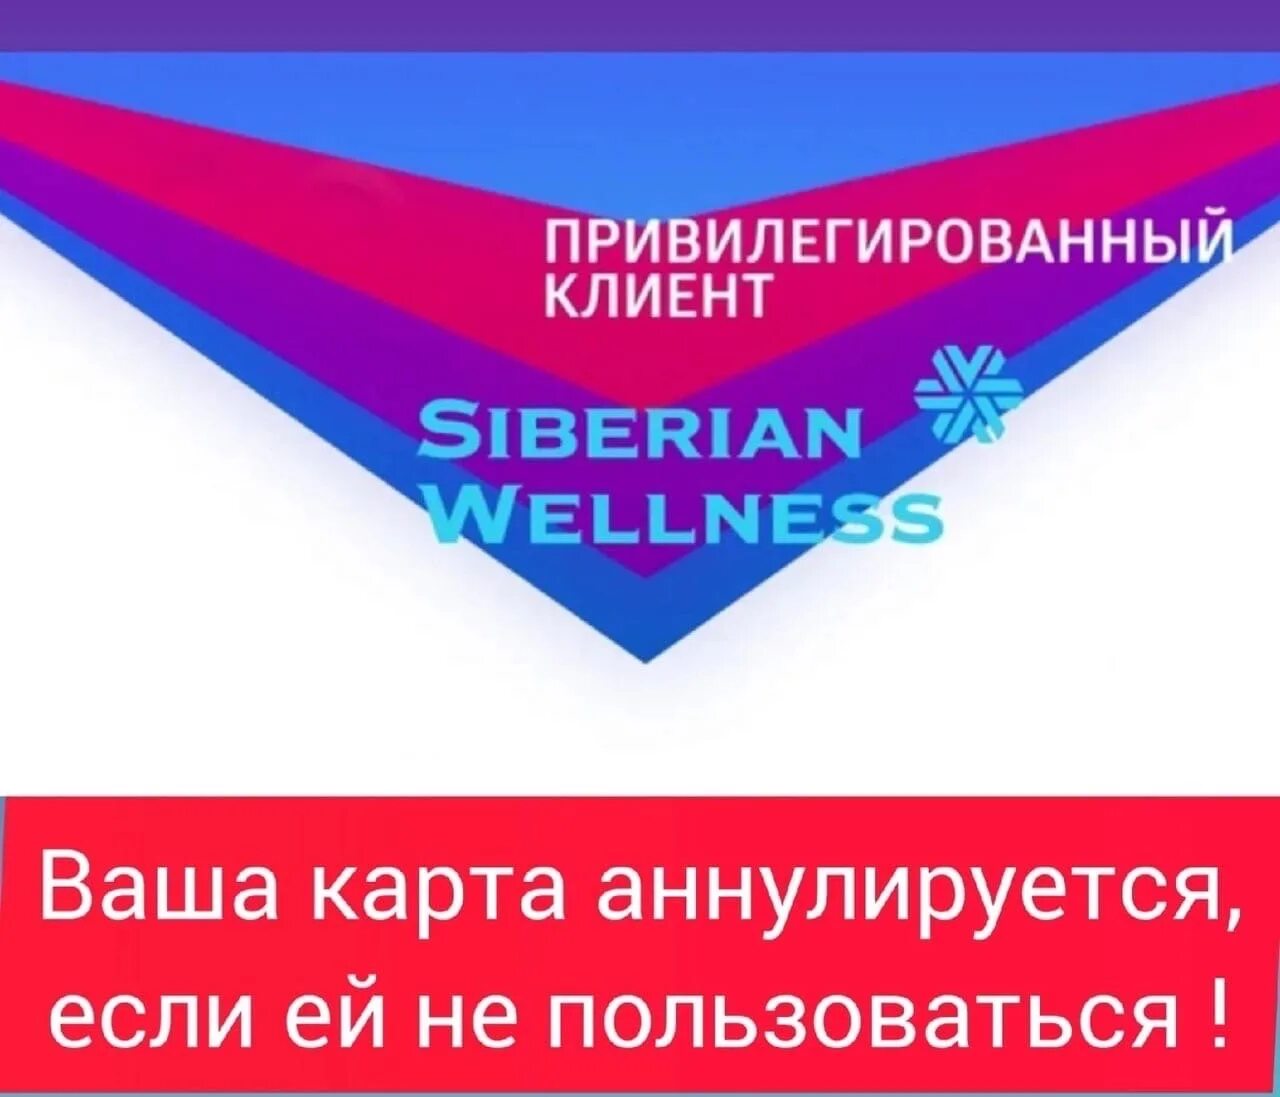 Privileged client. Привилегированный клиент Siberian Wellness. Кэшбэк Siberian Wellness. Привилегированные клиенты Сибирское здоровье. Кэшбэк Сибирское здоровье.